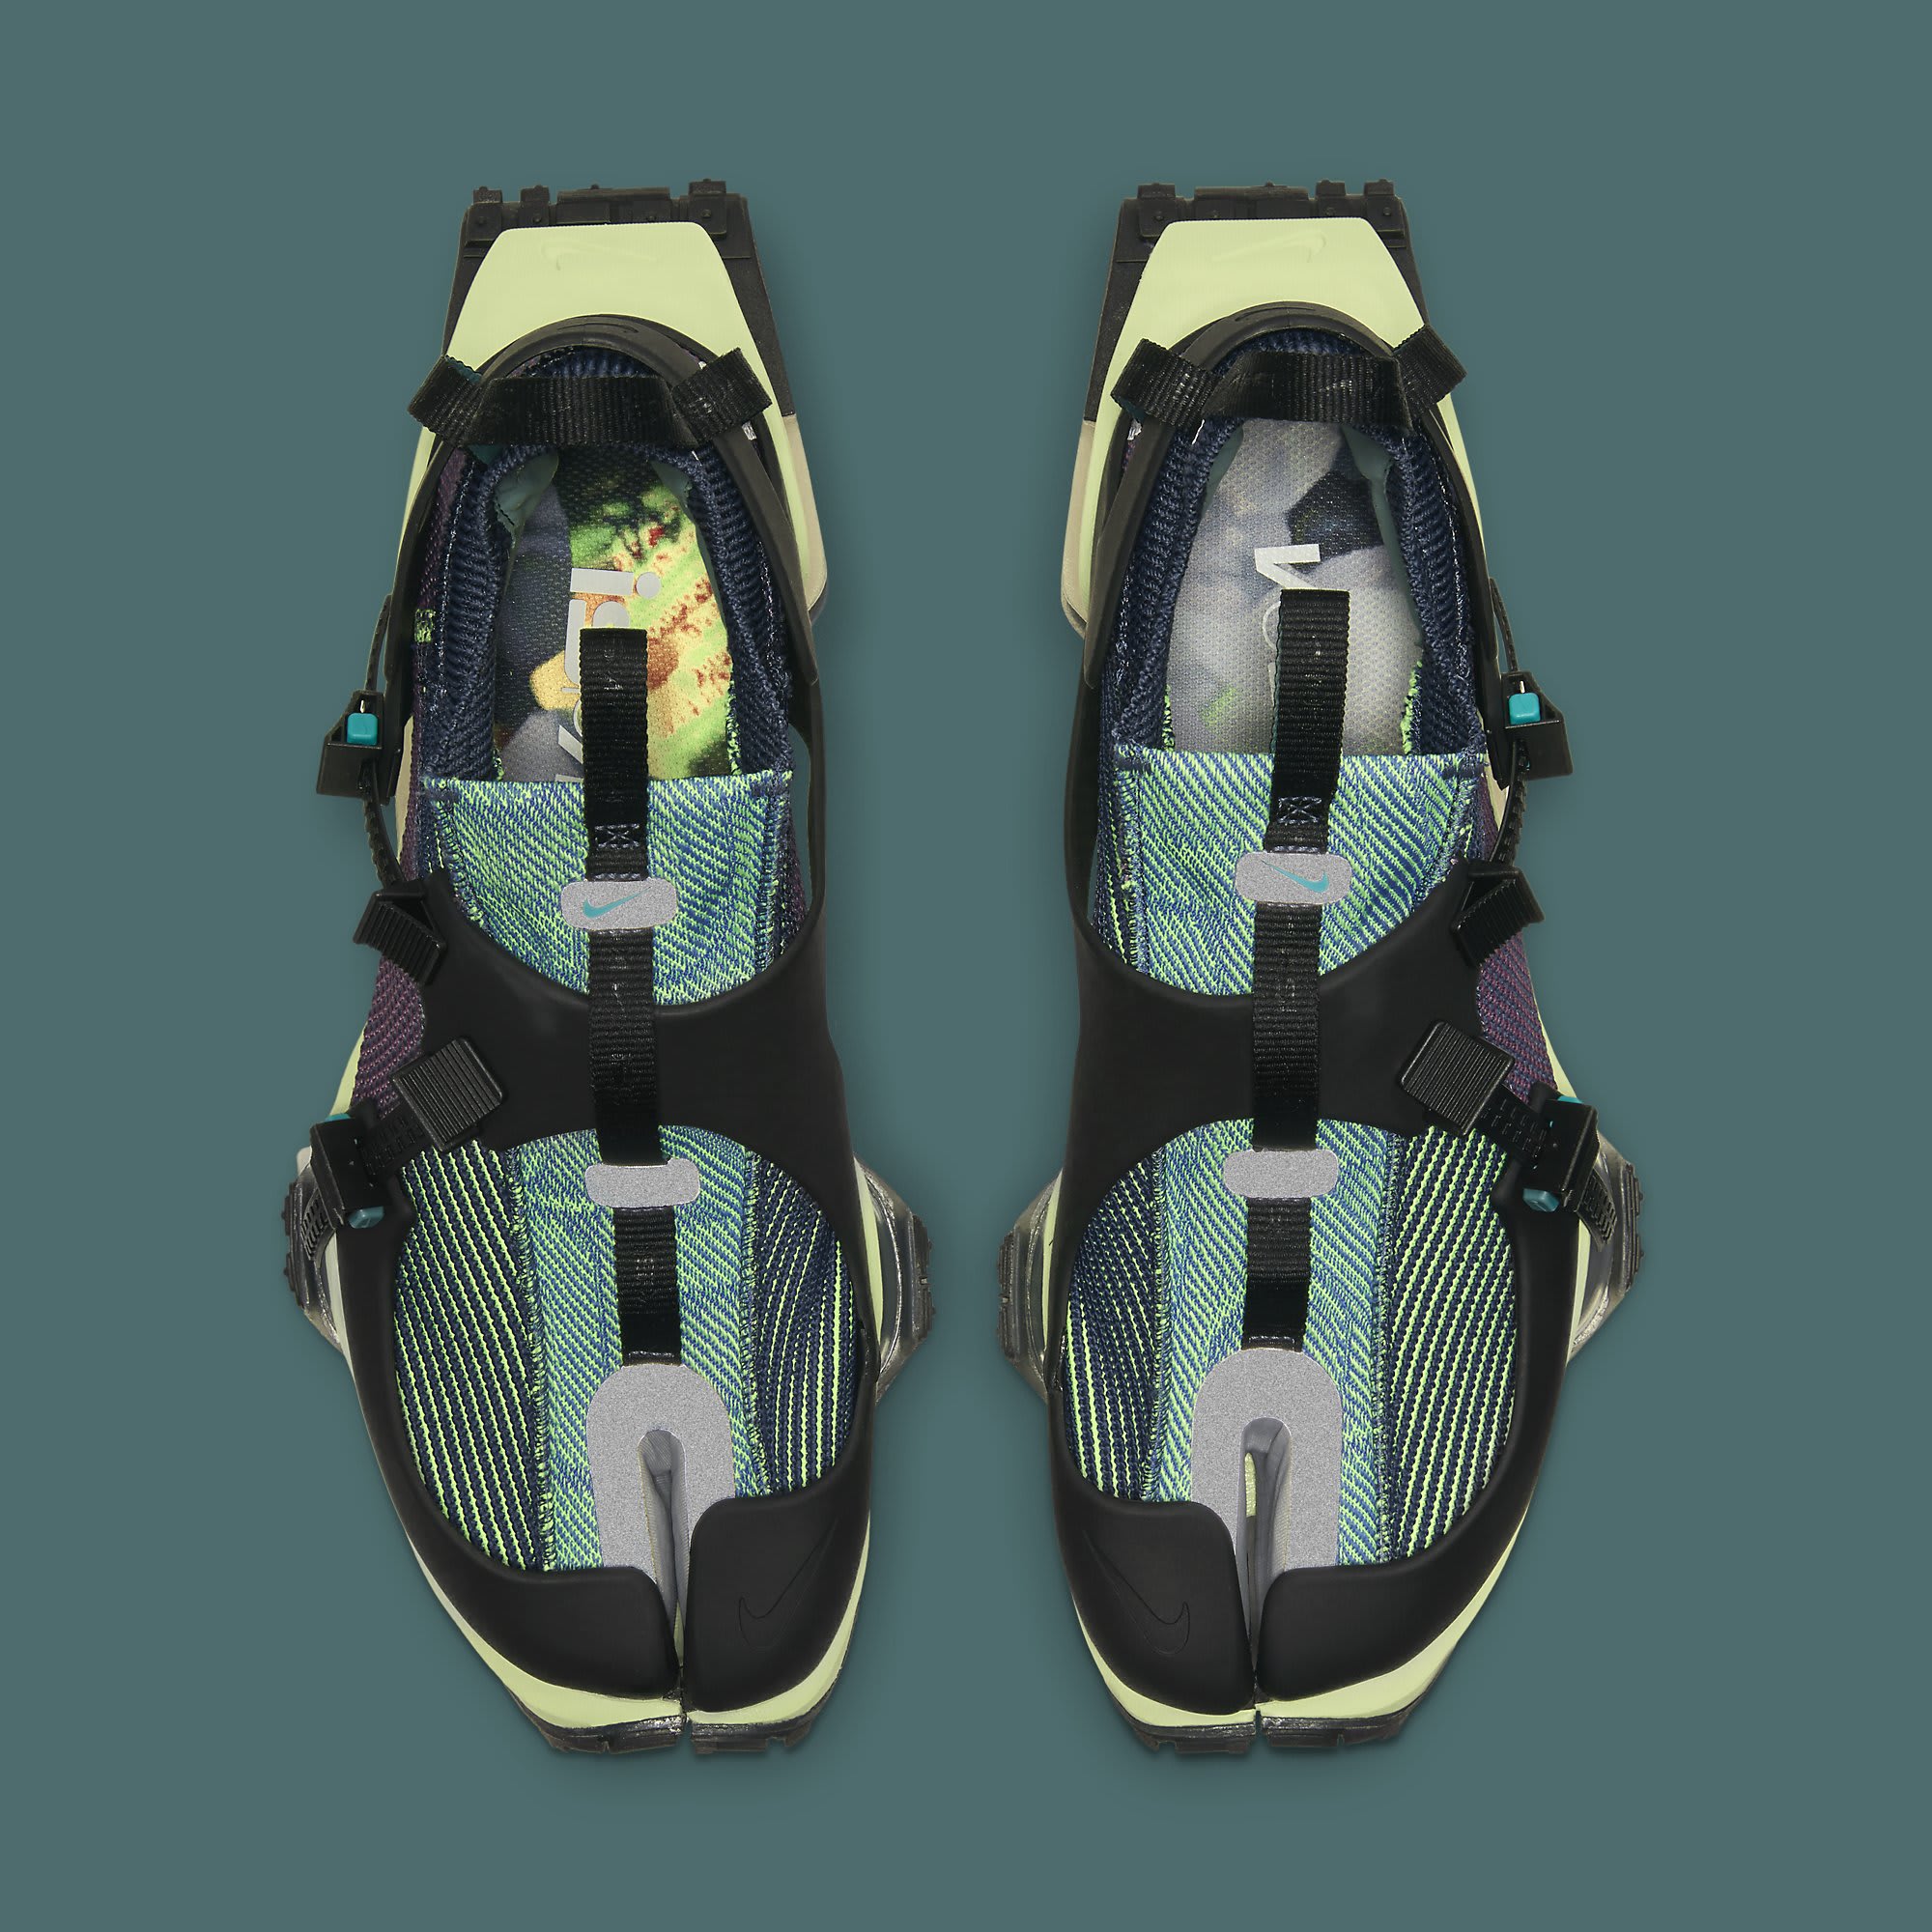 Nike ISPA Road Warrior 'Clear Jade' Release Date CW9410-400 | Sole ...